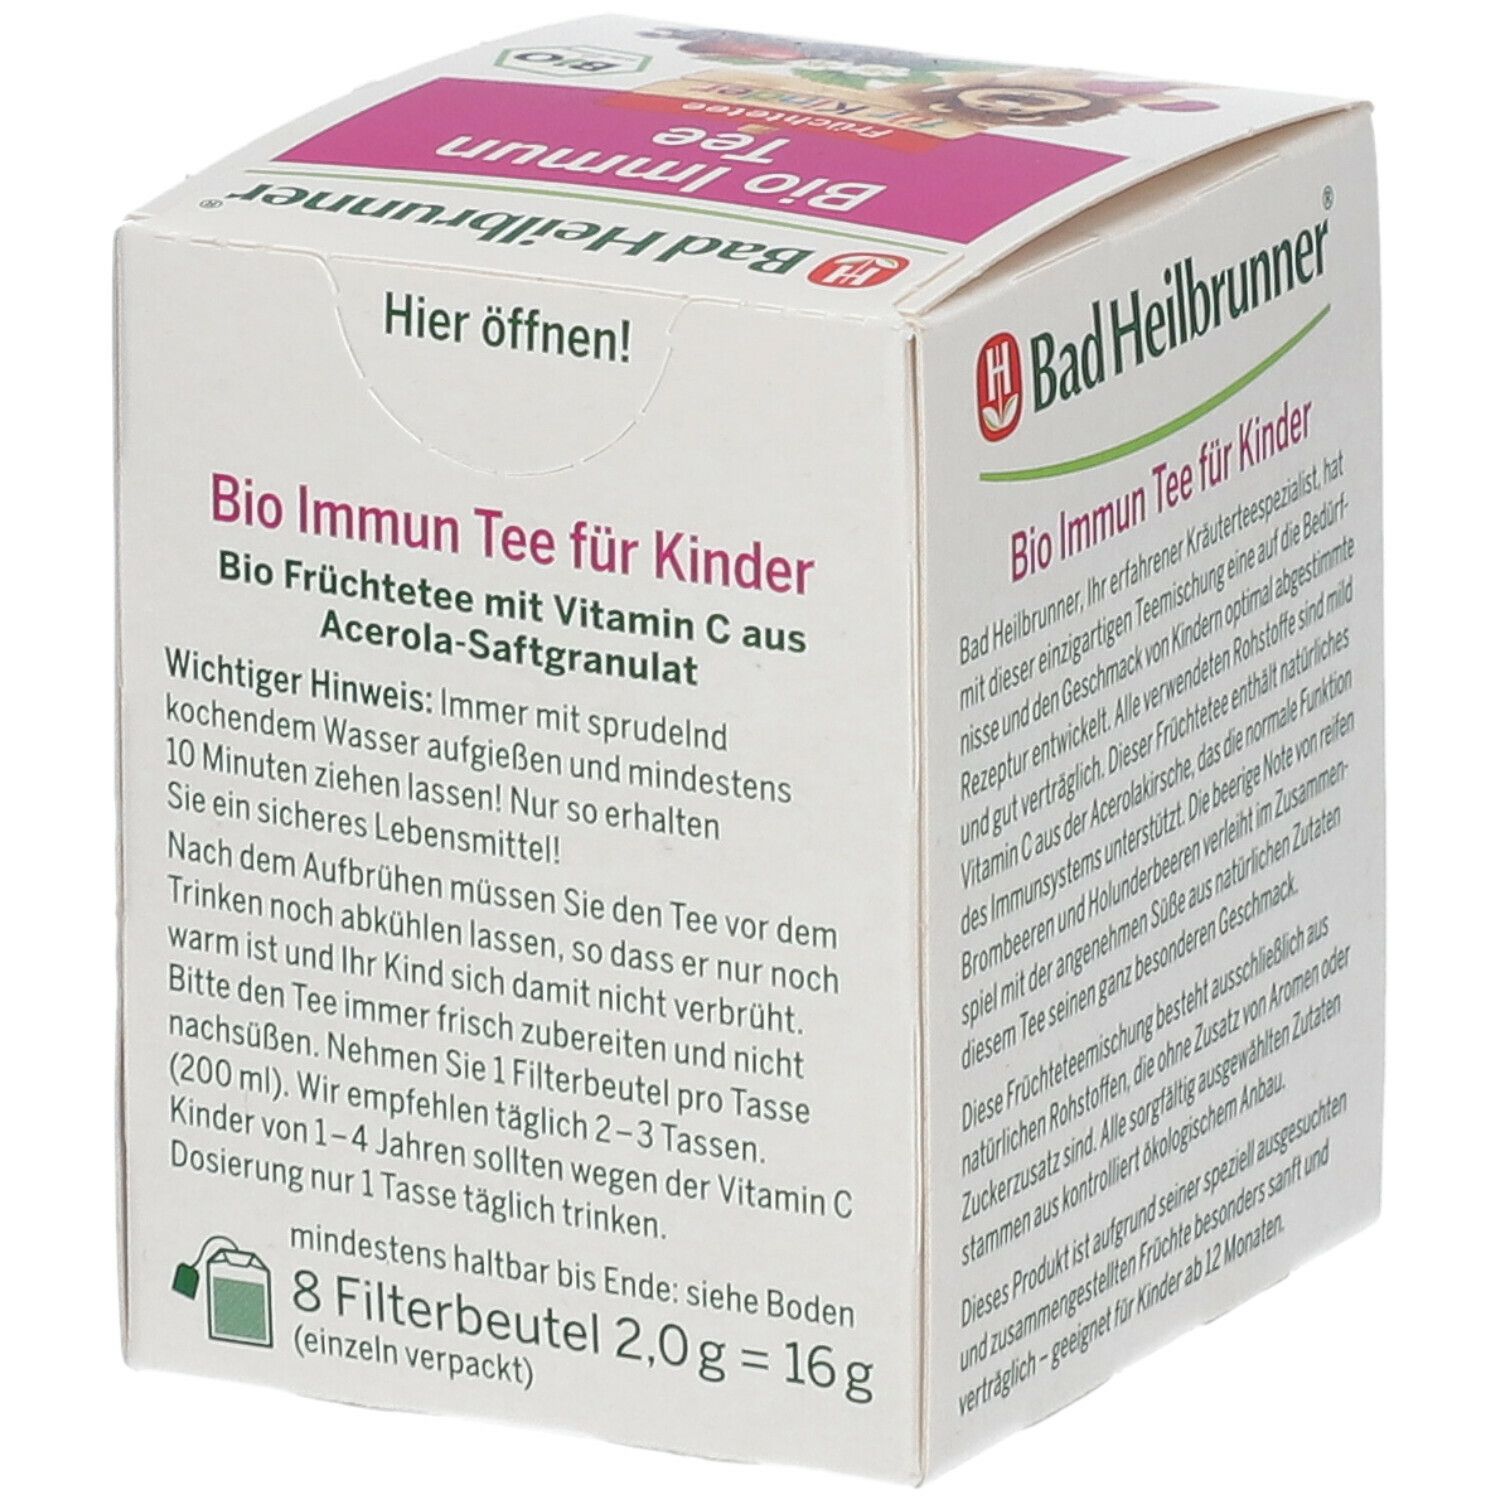 Bad Heilbrunner® Immun Tee für Kinder